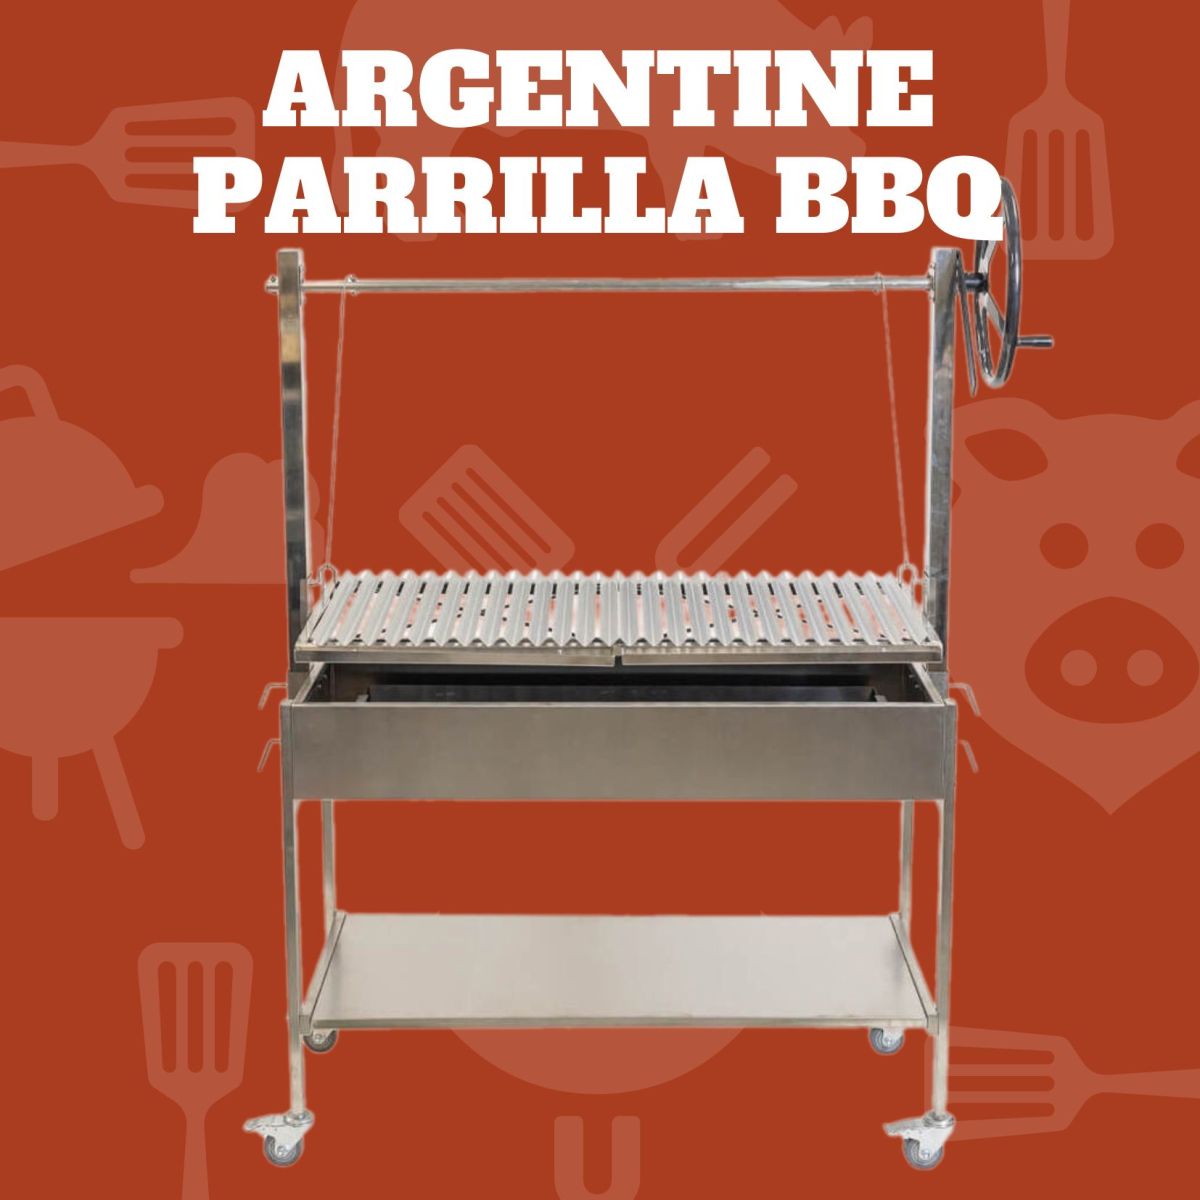 This_image_shows_Argentine_Parrilla_BBQ